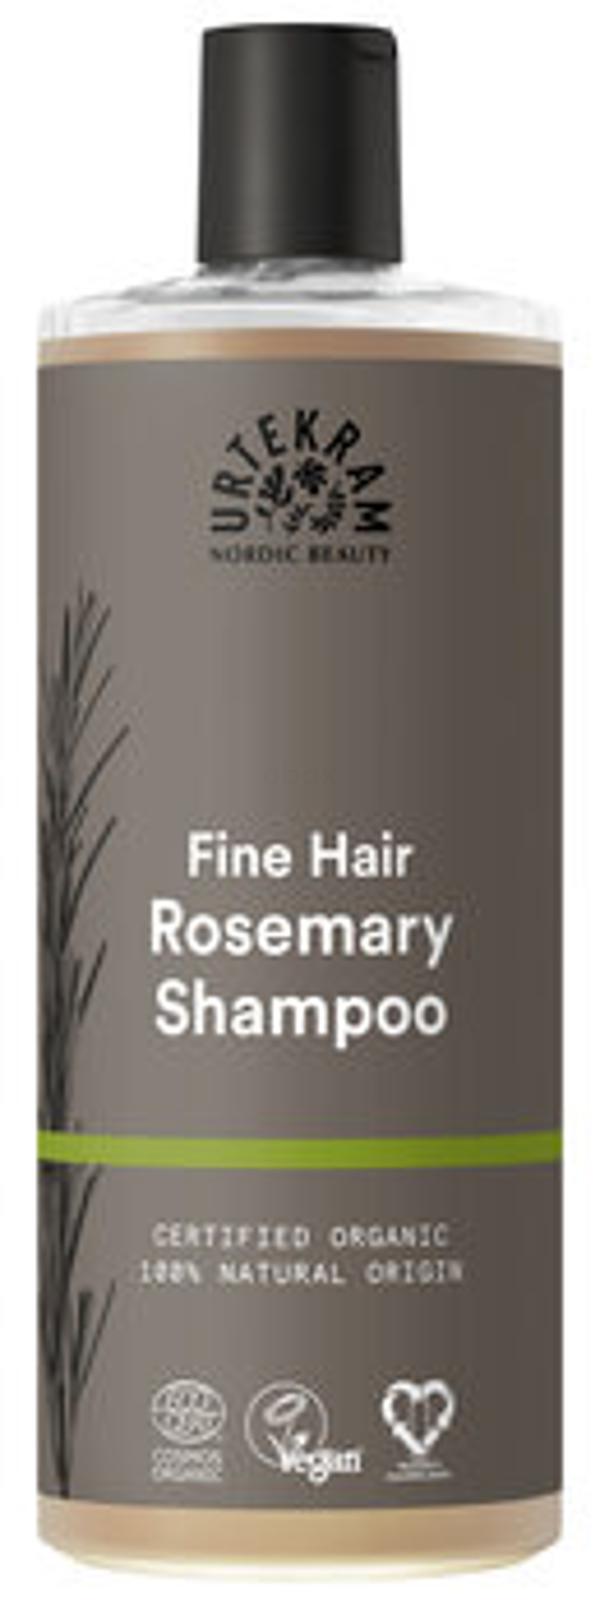 Produktfoto zu Shampoo Rosmarin 500ml